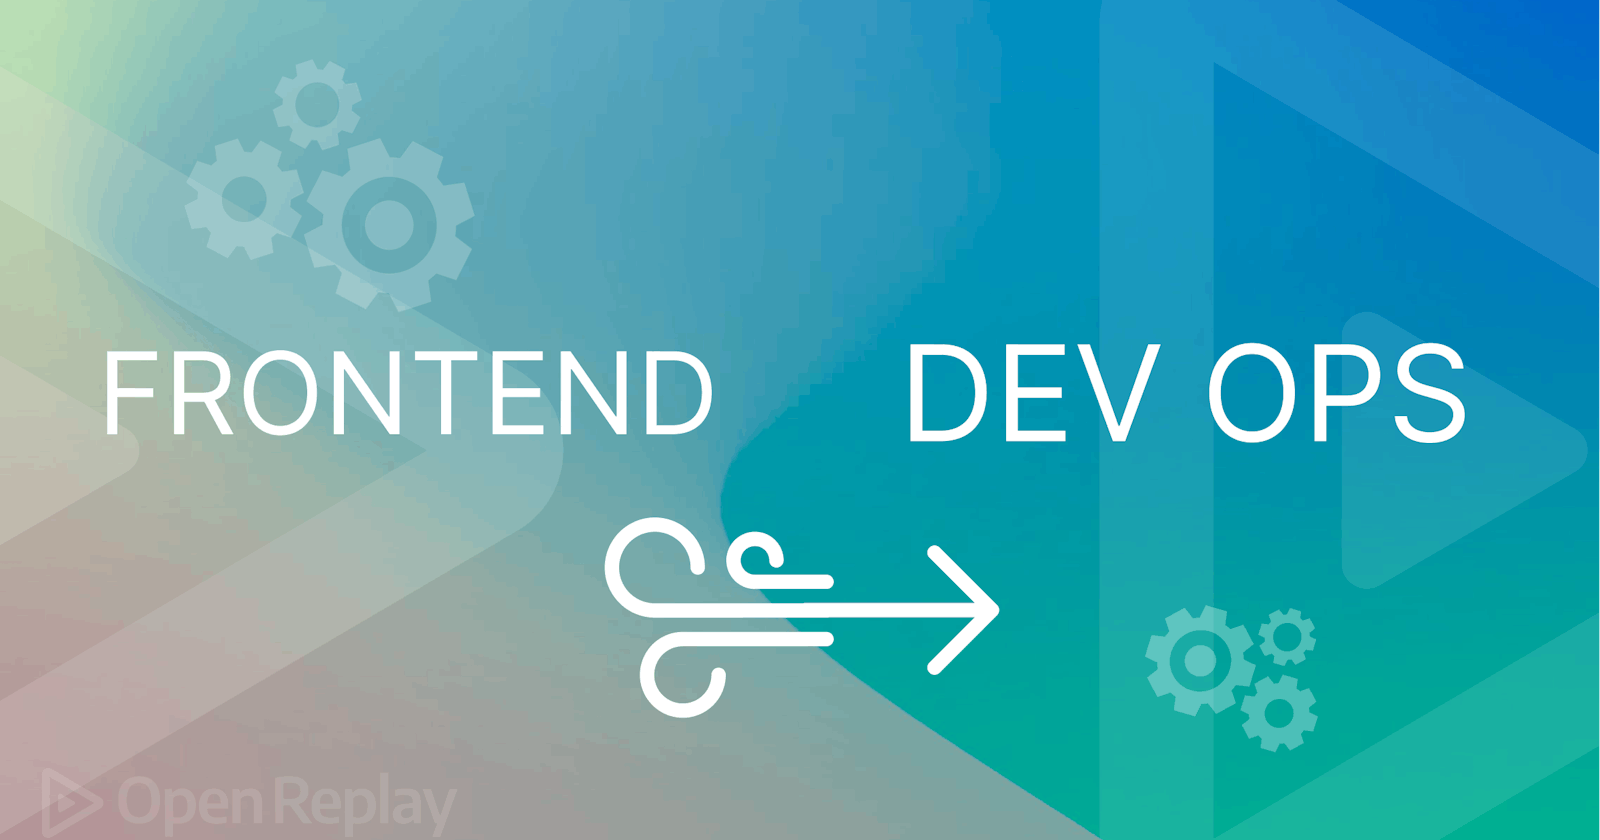 Transitioning from Development to DevOps